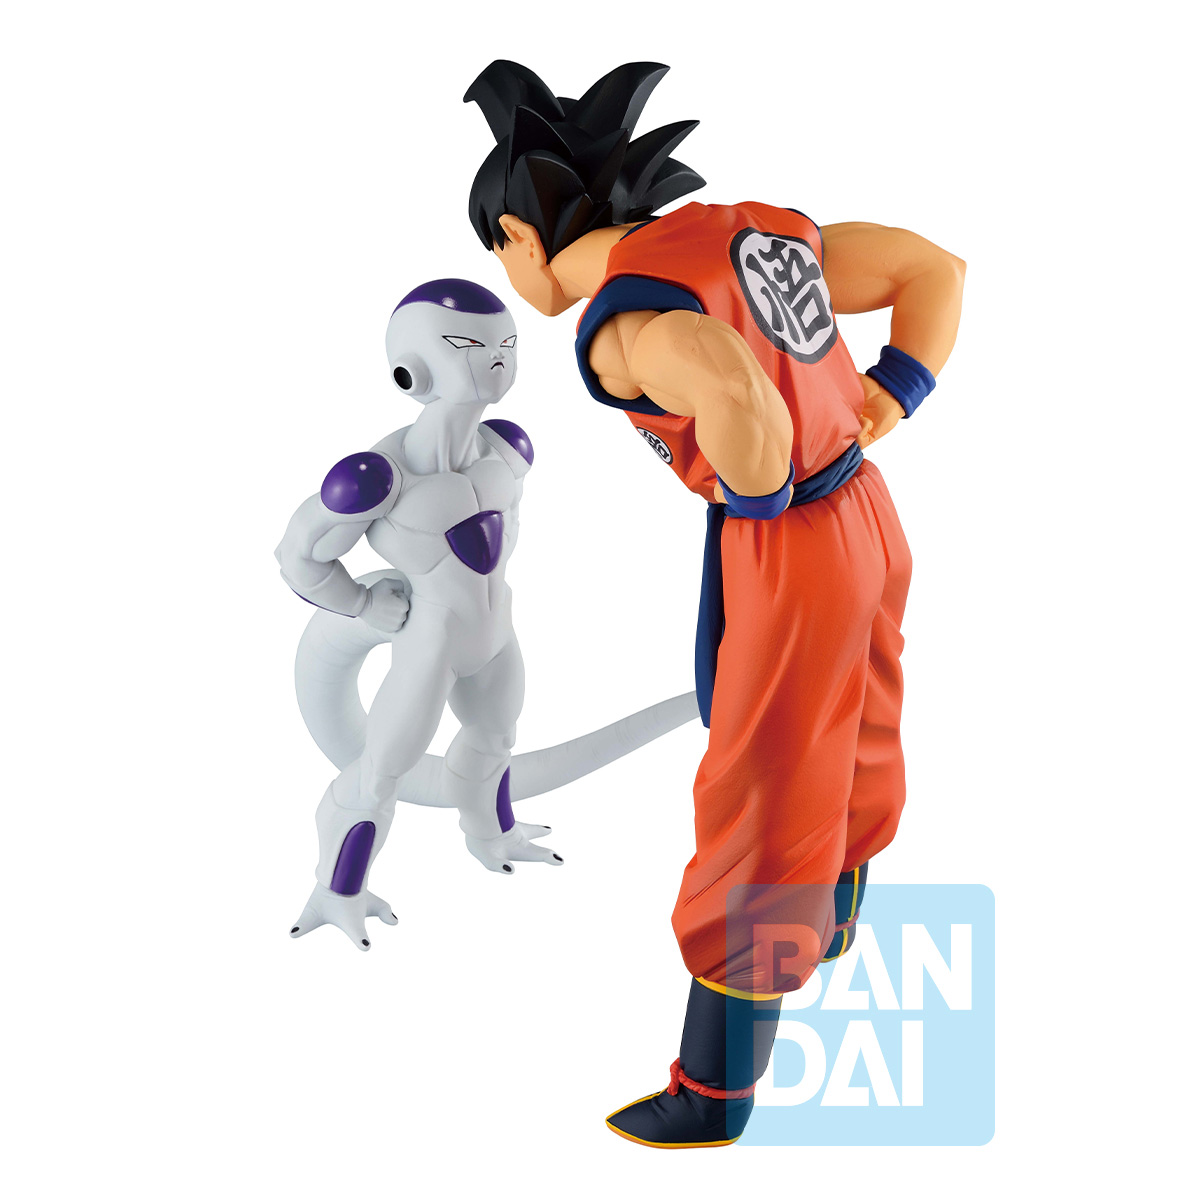 Son Goku & Frieza Ball Battle on Planet Namek Ver Dragon Ball Z Ichiban Figure image count 1